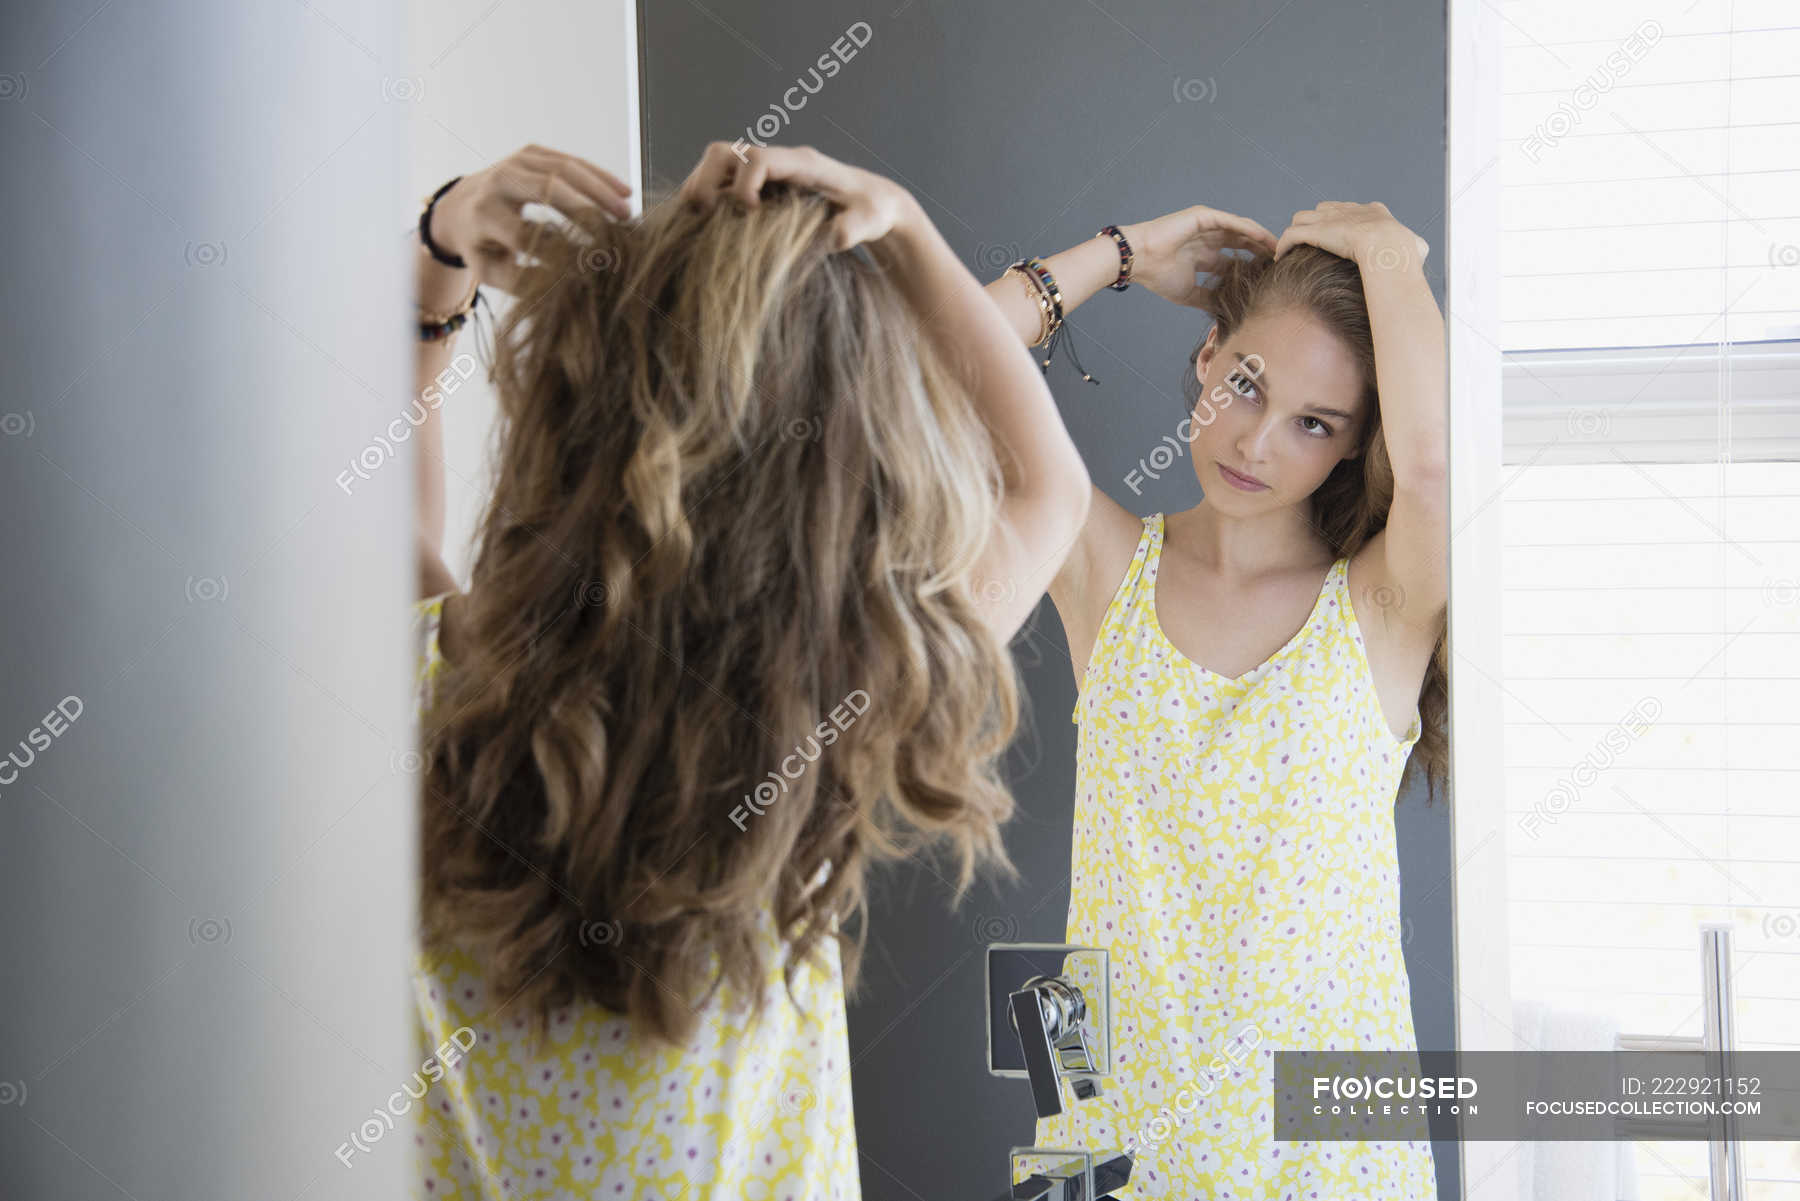 Teenage girl examining hair in mirror — lock of hair, indoors - Stock Photo  | #222921152